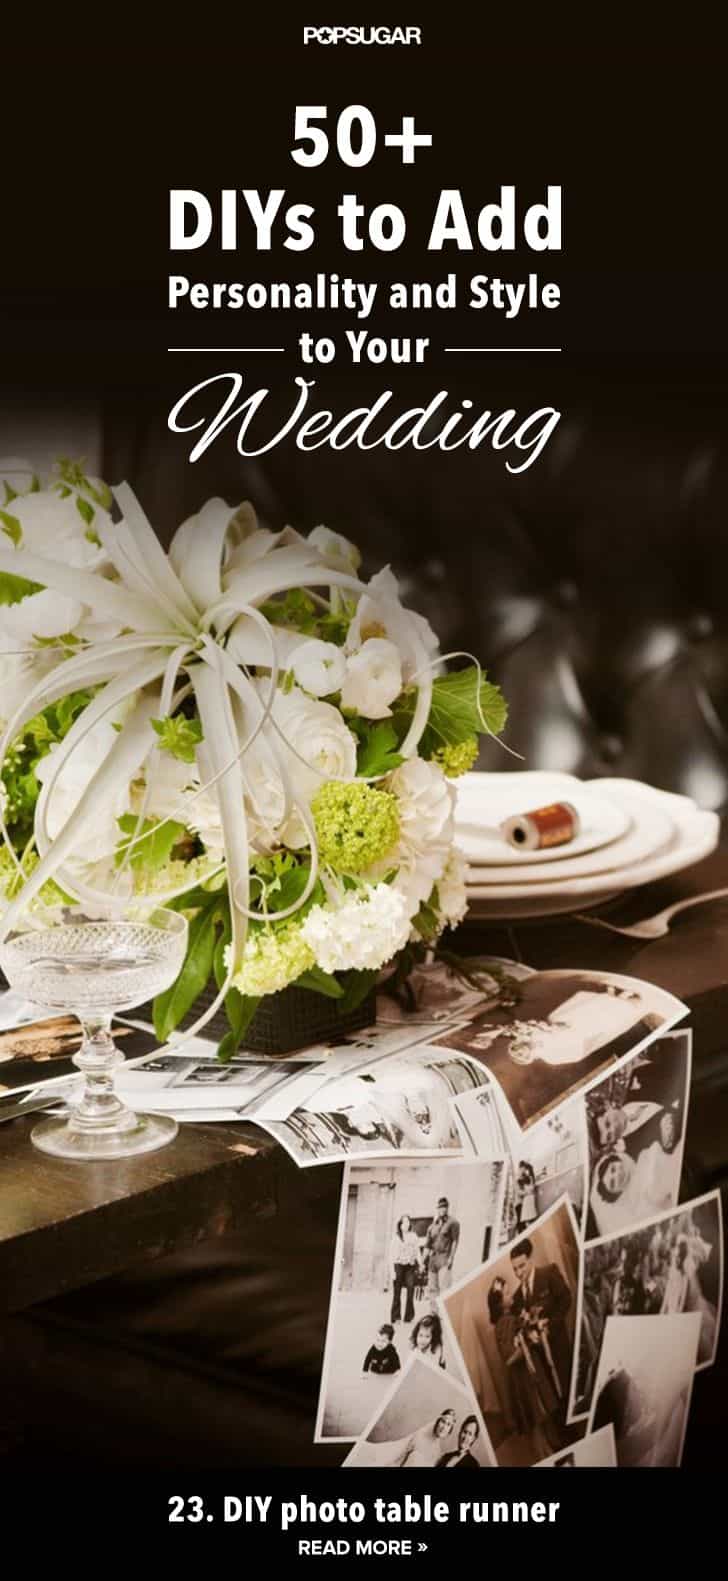 Reception Decor and Favors - Wedding planning series Part 5 - www.michellejdesigns.com